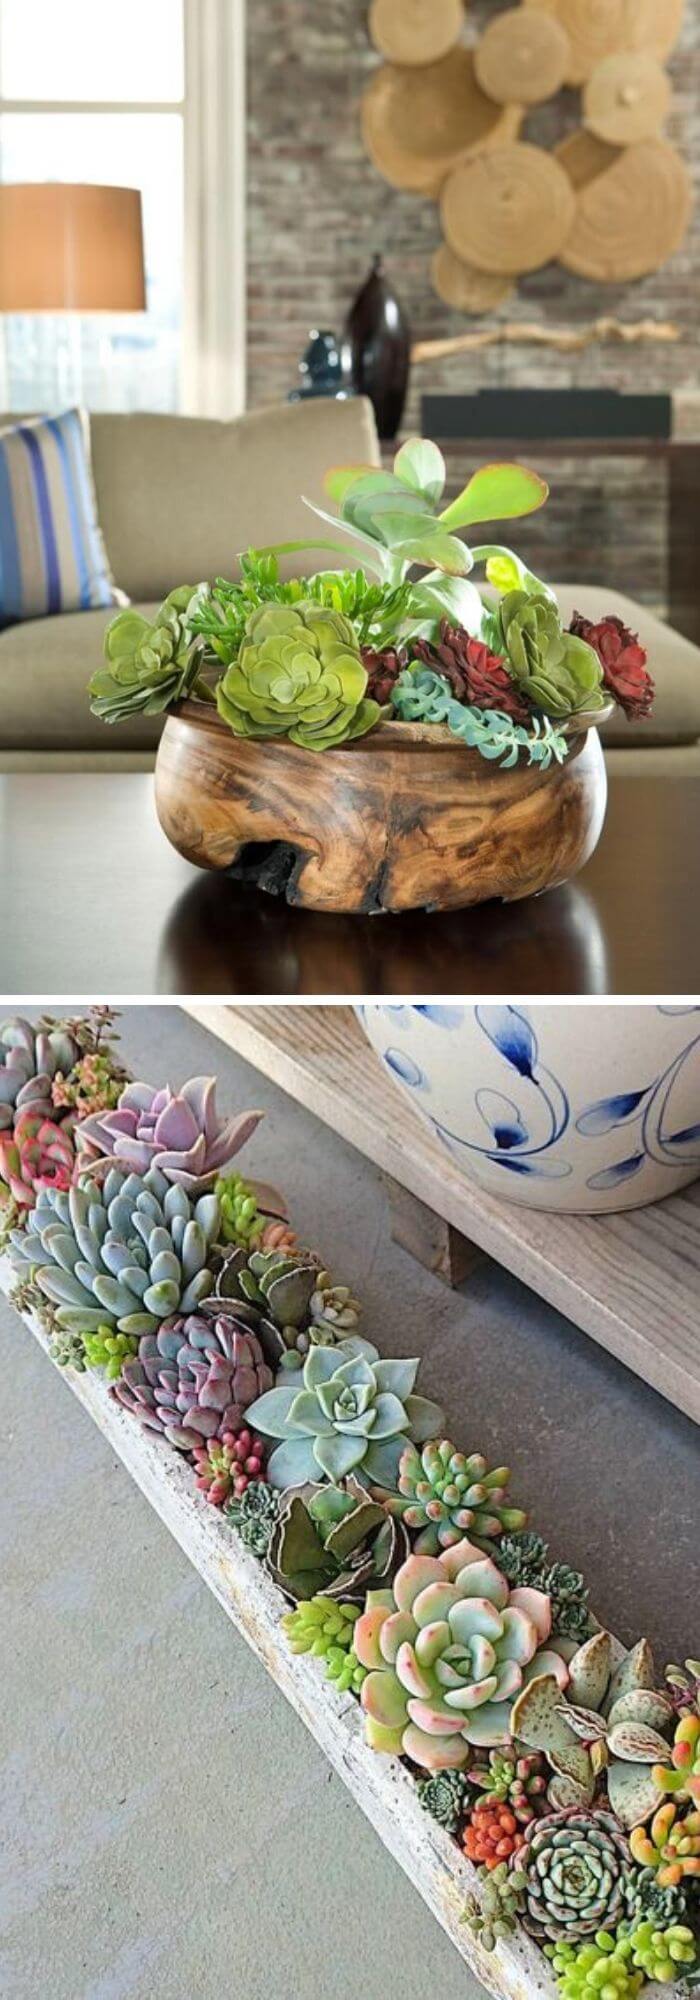 2 living room plants